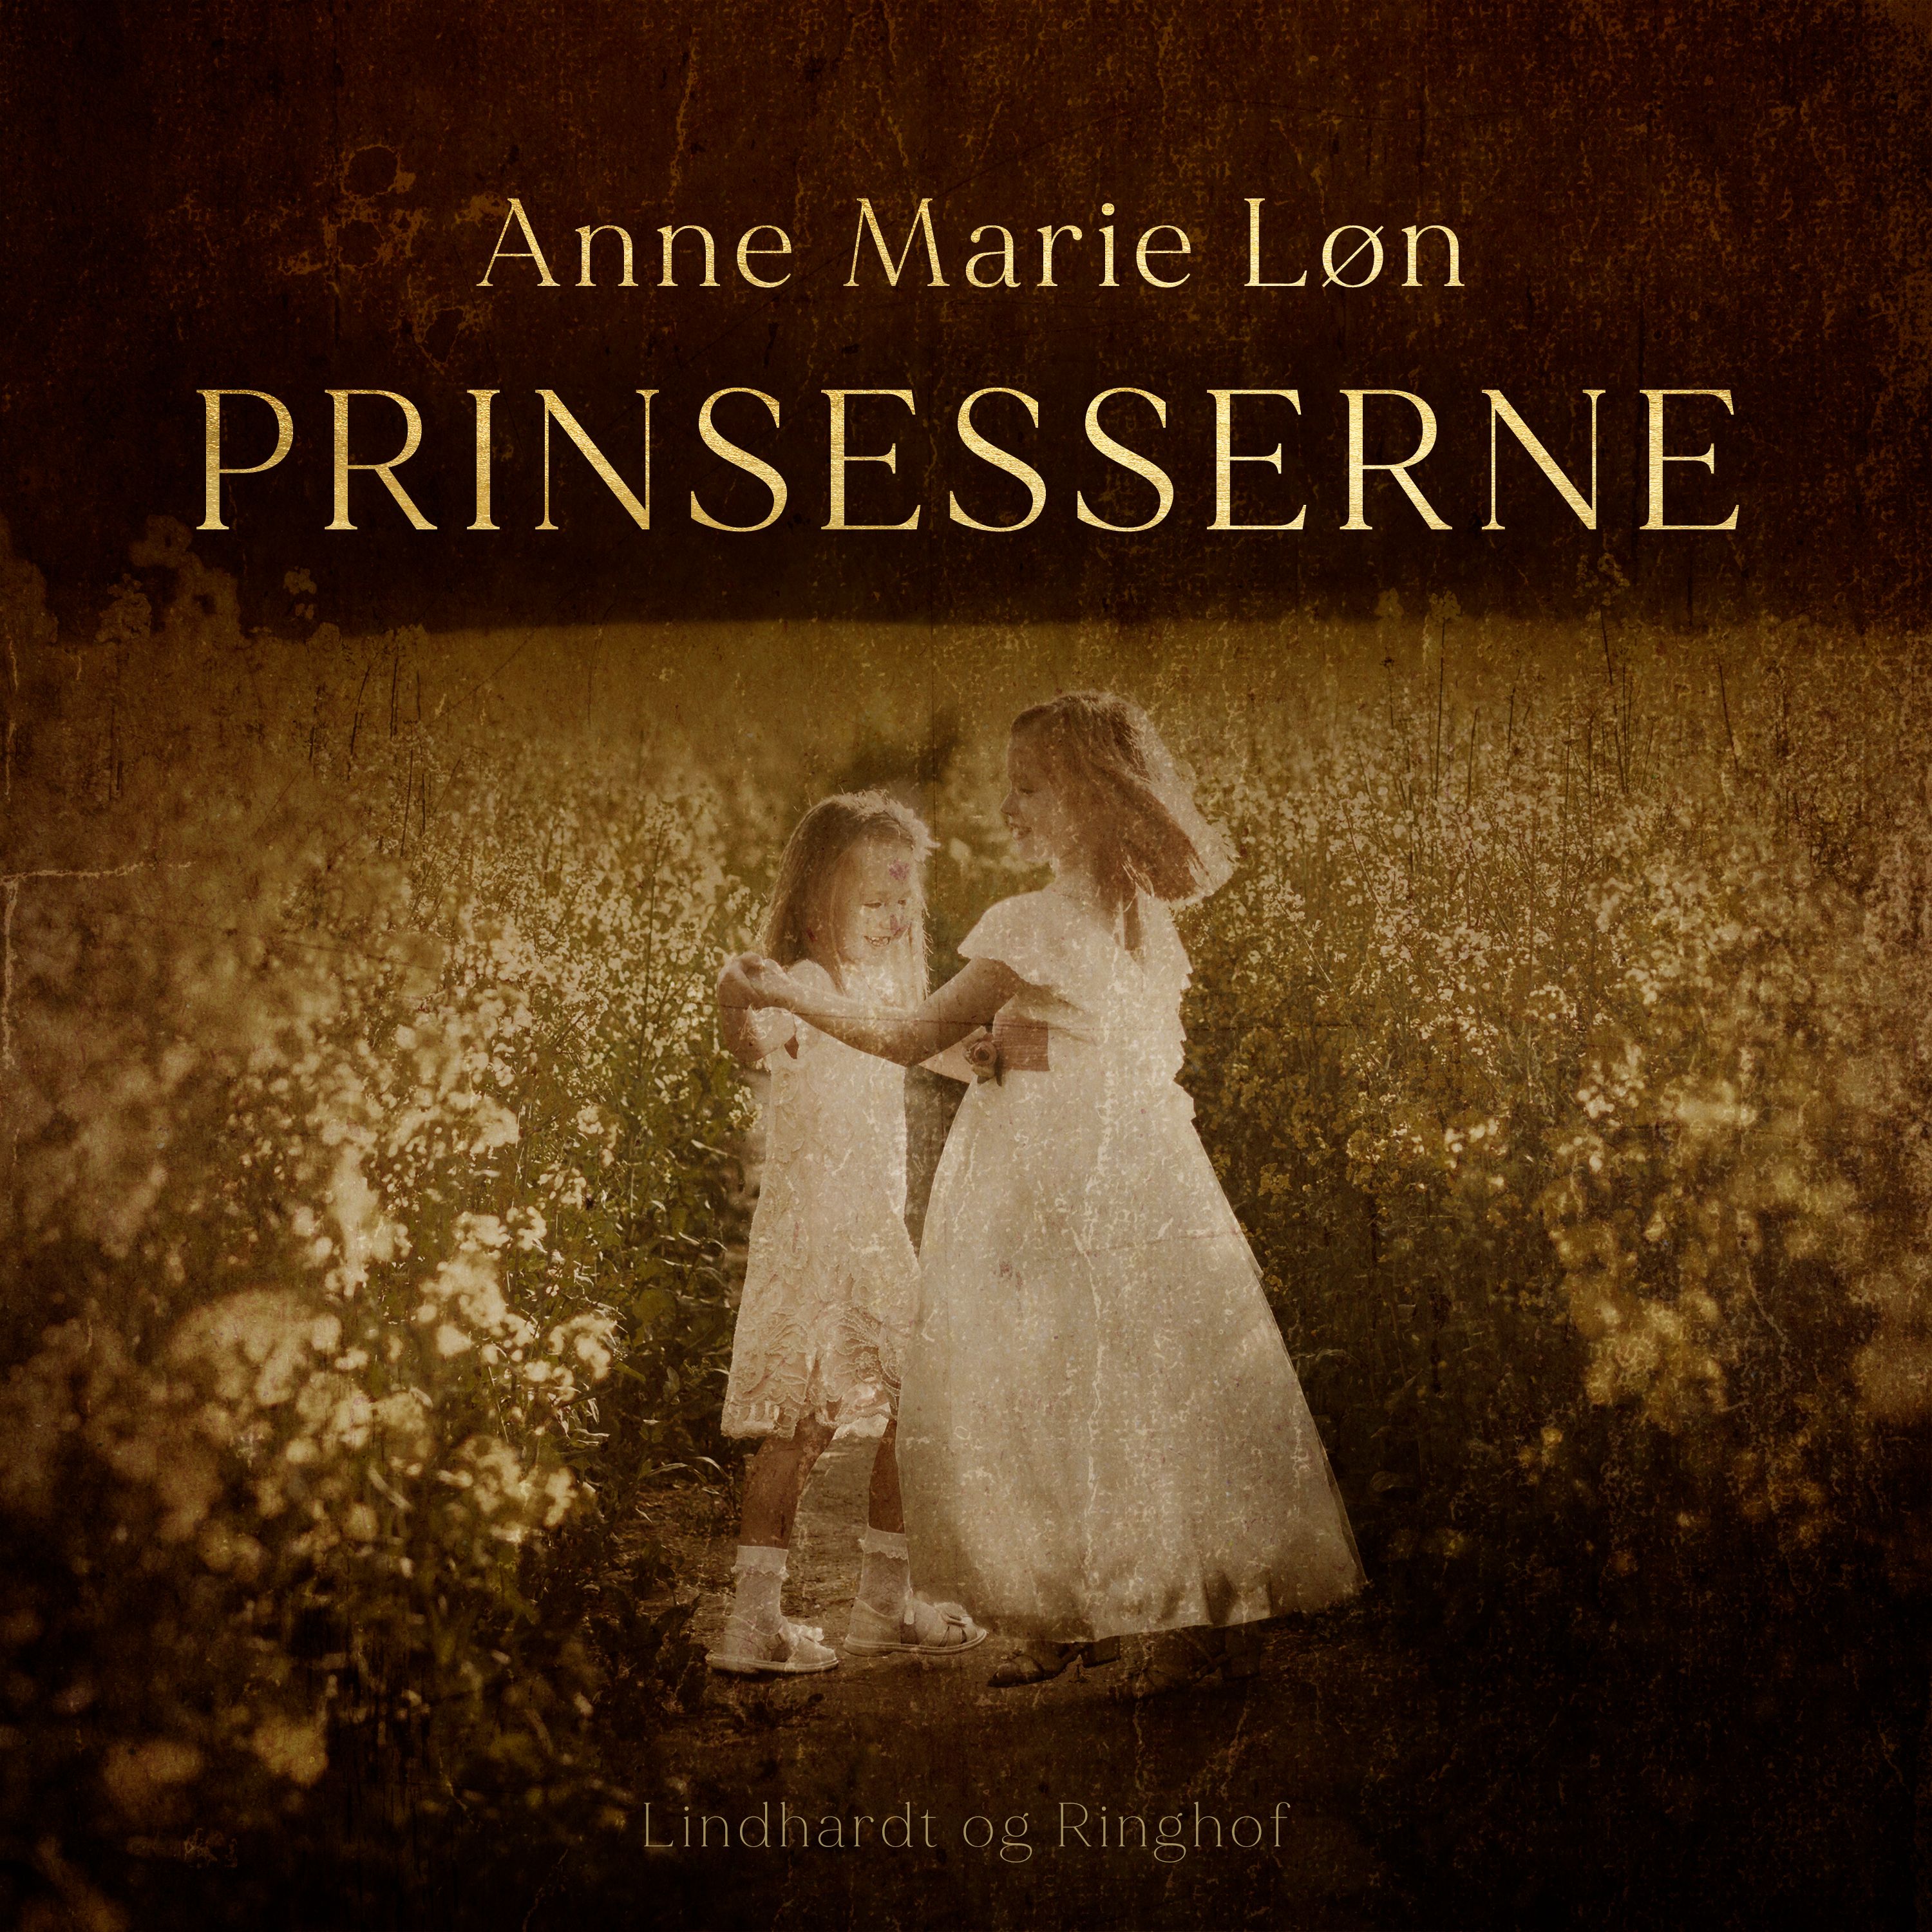 Prinsesserne, ljudbok av Anne Marie Løn